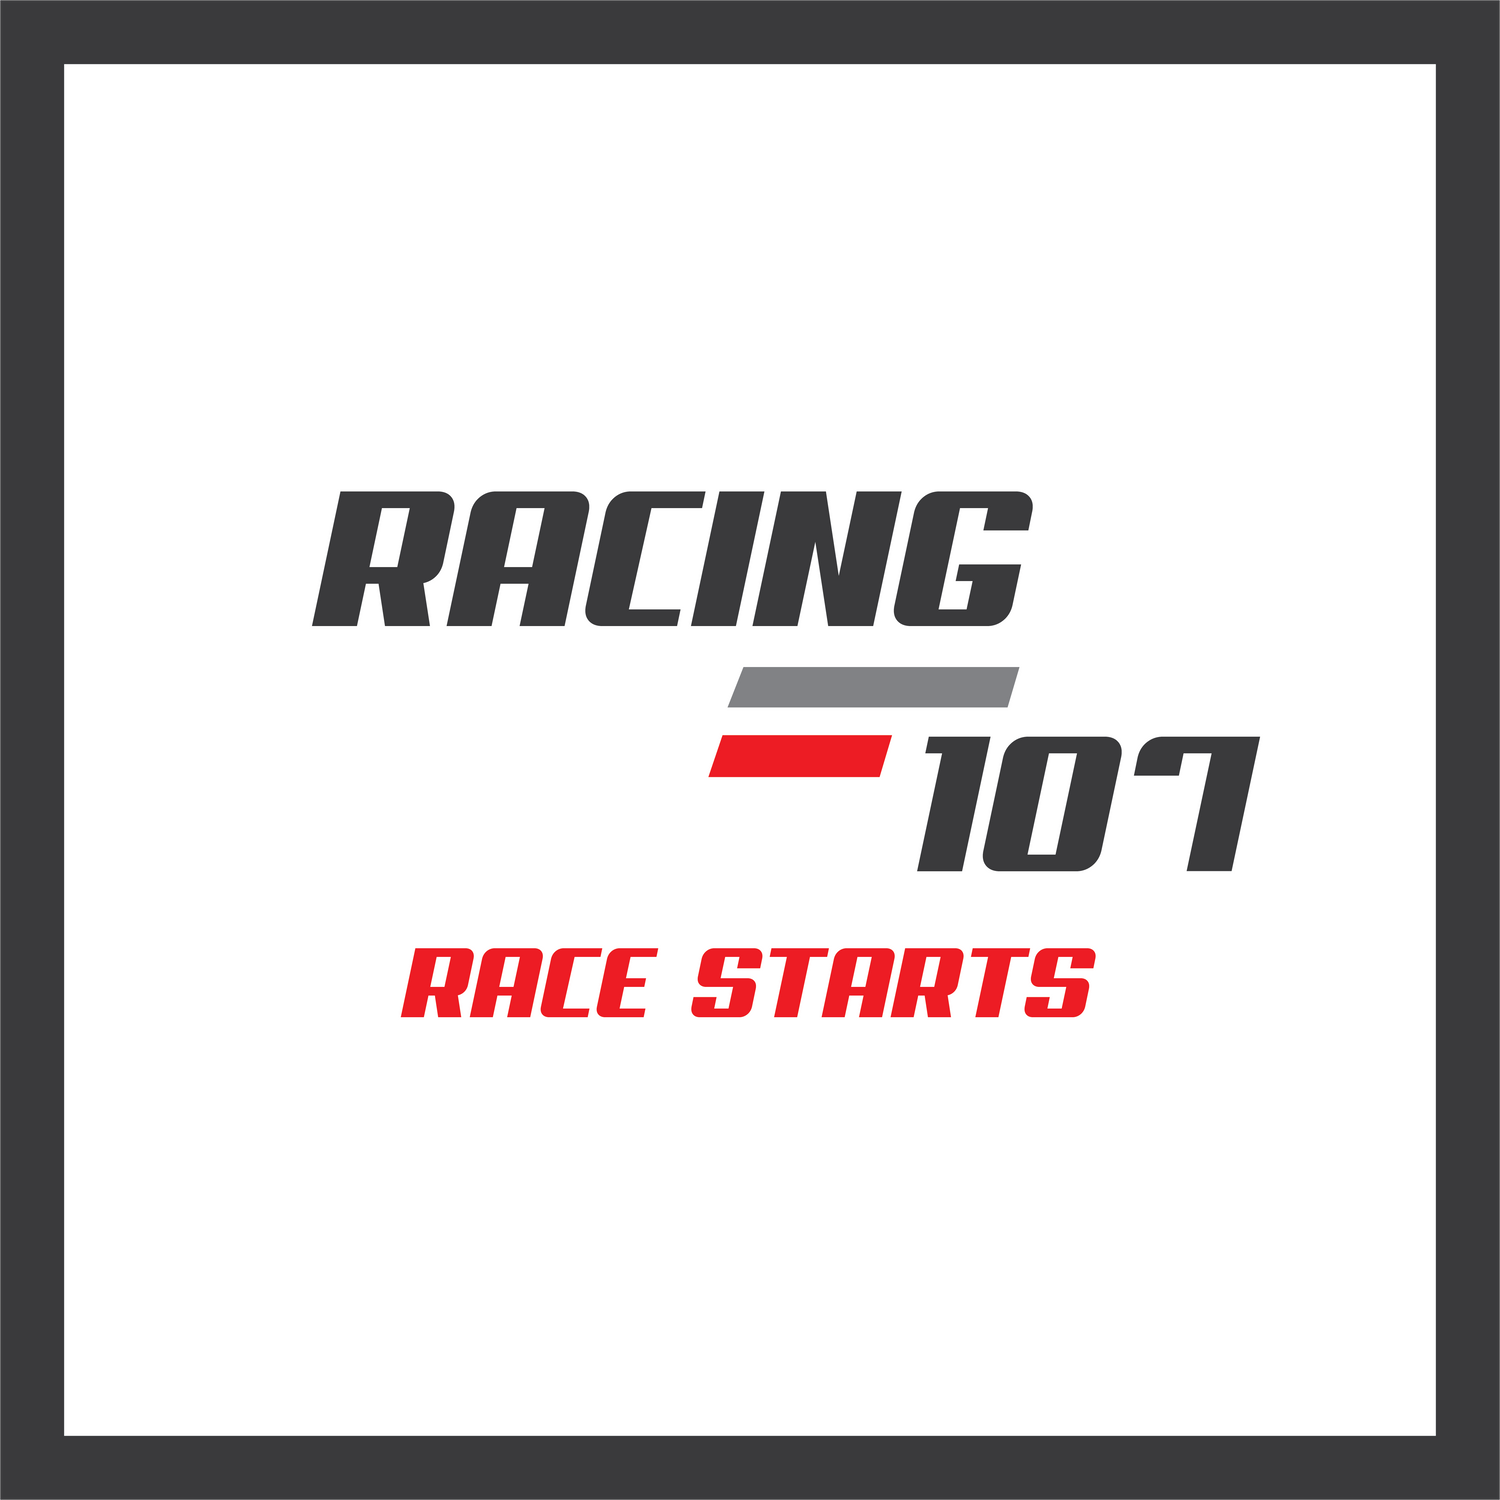 Racing 107 - Race Starts